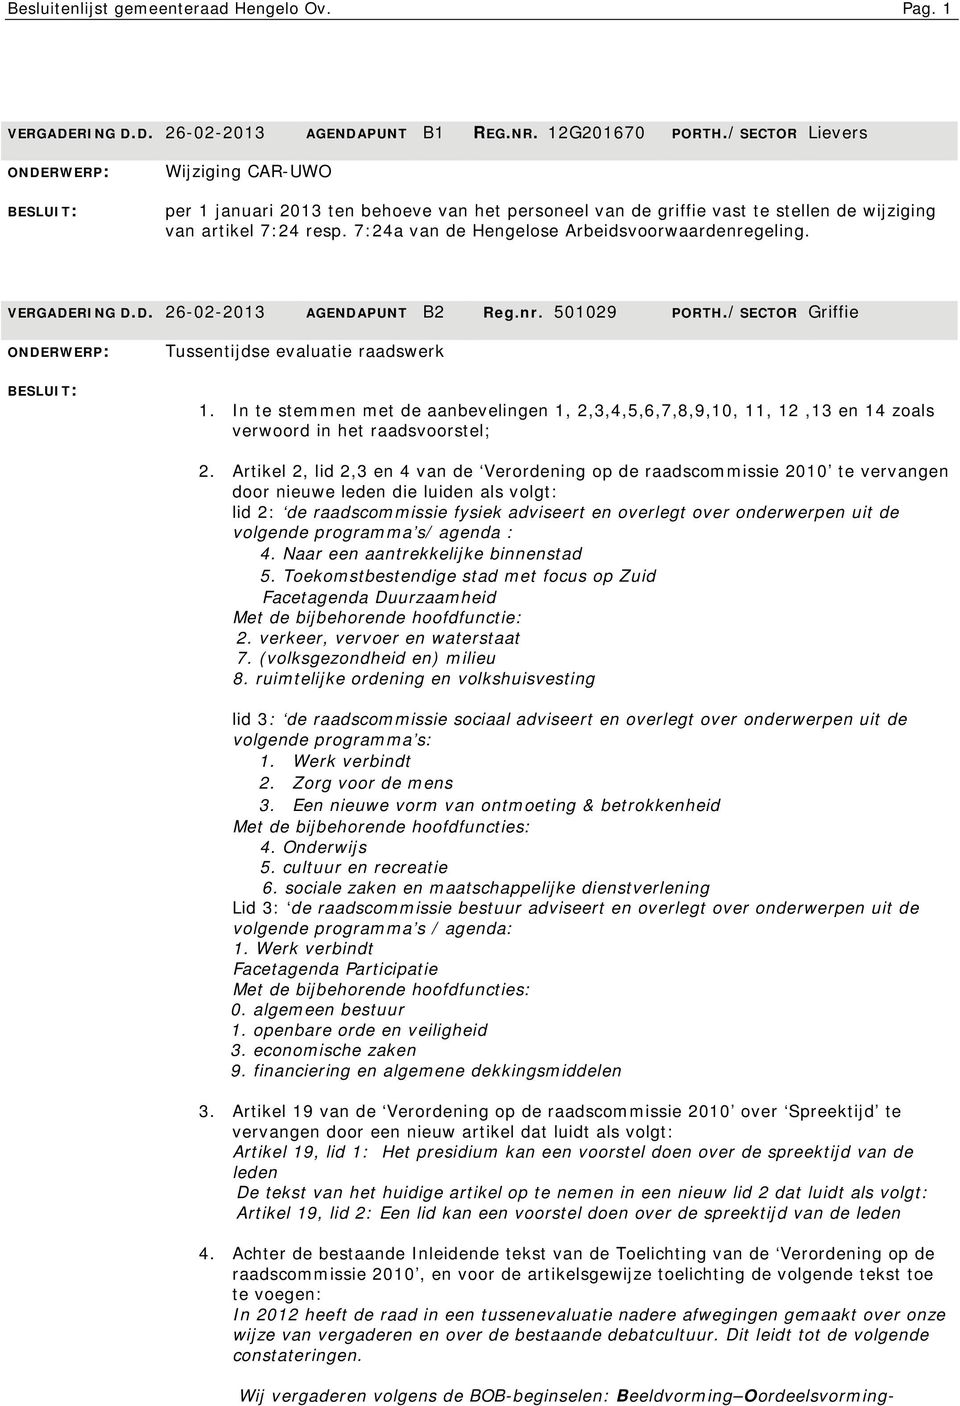 VERGADERING D.D. 26-02-2013 AGENDAPUNT B2 Reg.nr. 501029 PORTH./SECTOR Griffie Tussentijdse evaluatie raadswerk 1.